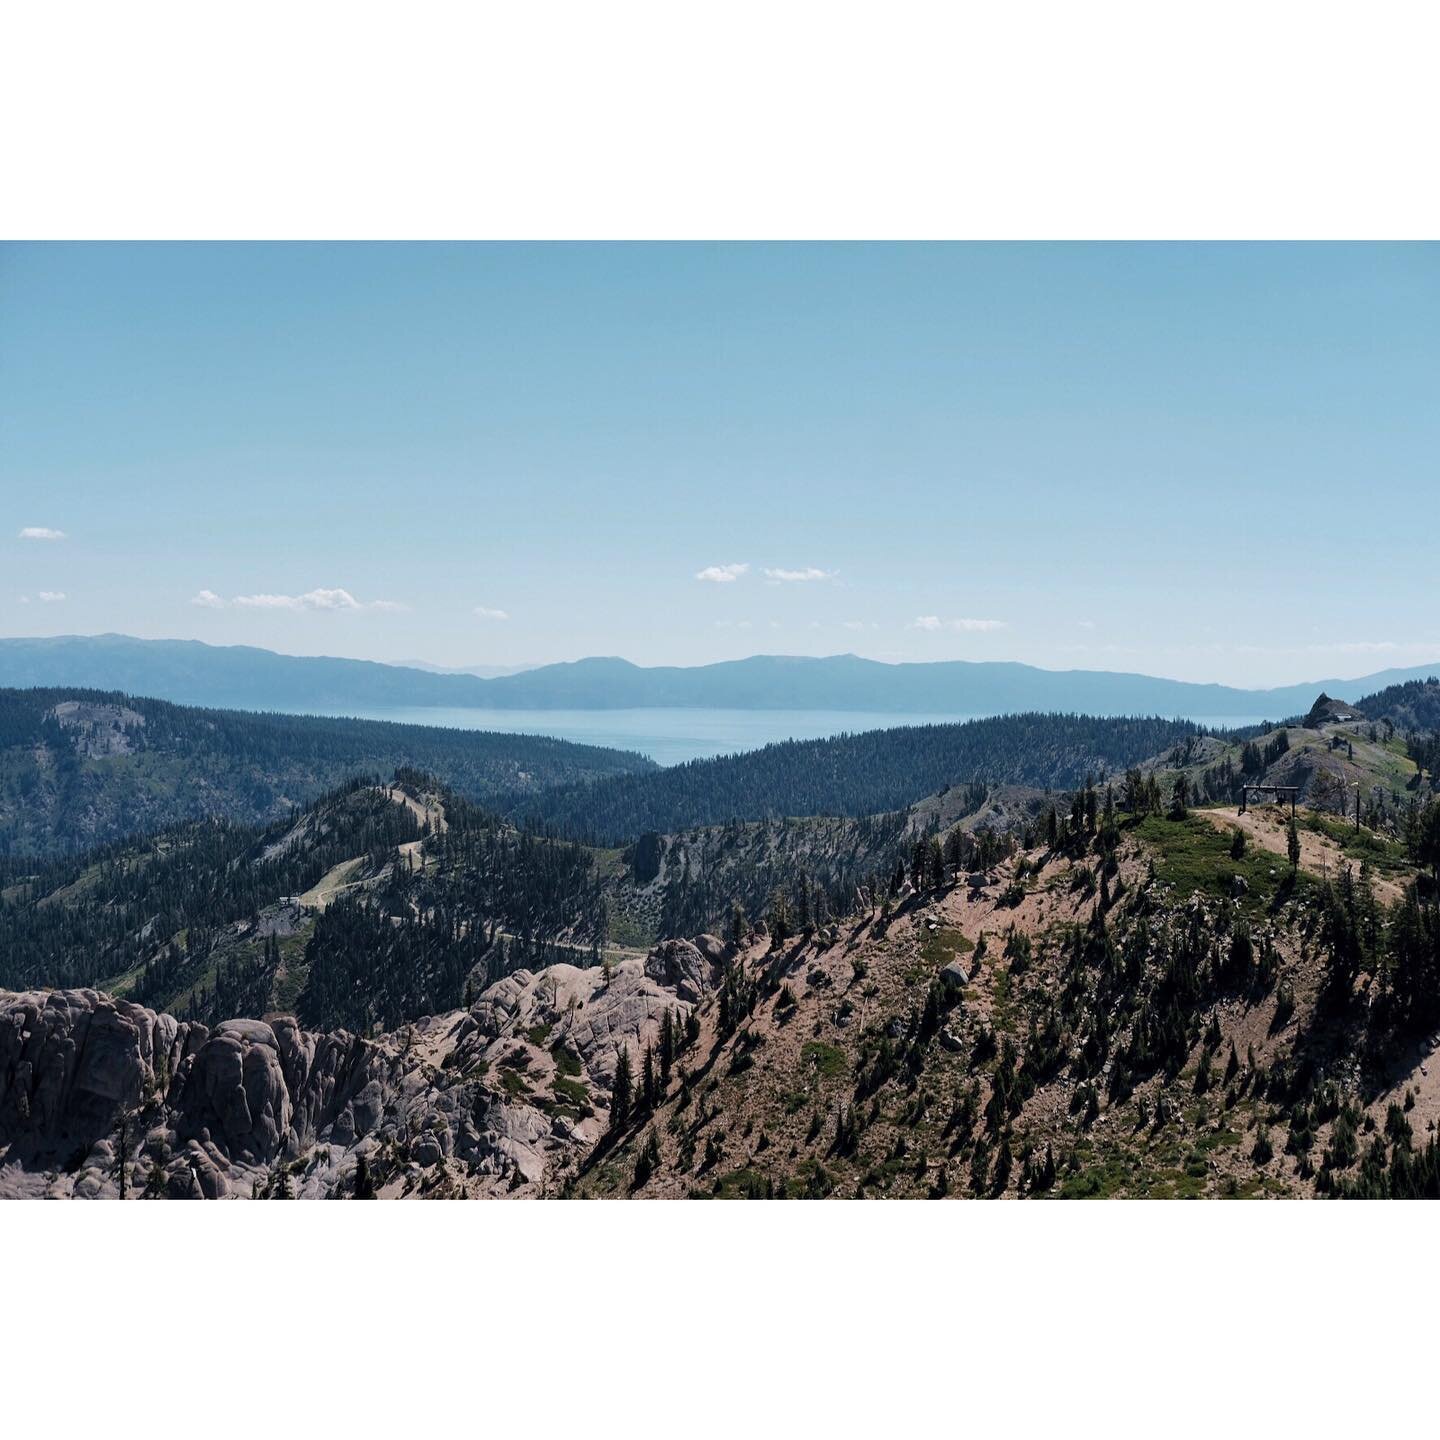 Squaw Valley at Lake Tahoe, Nevada